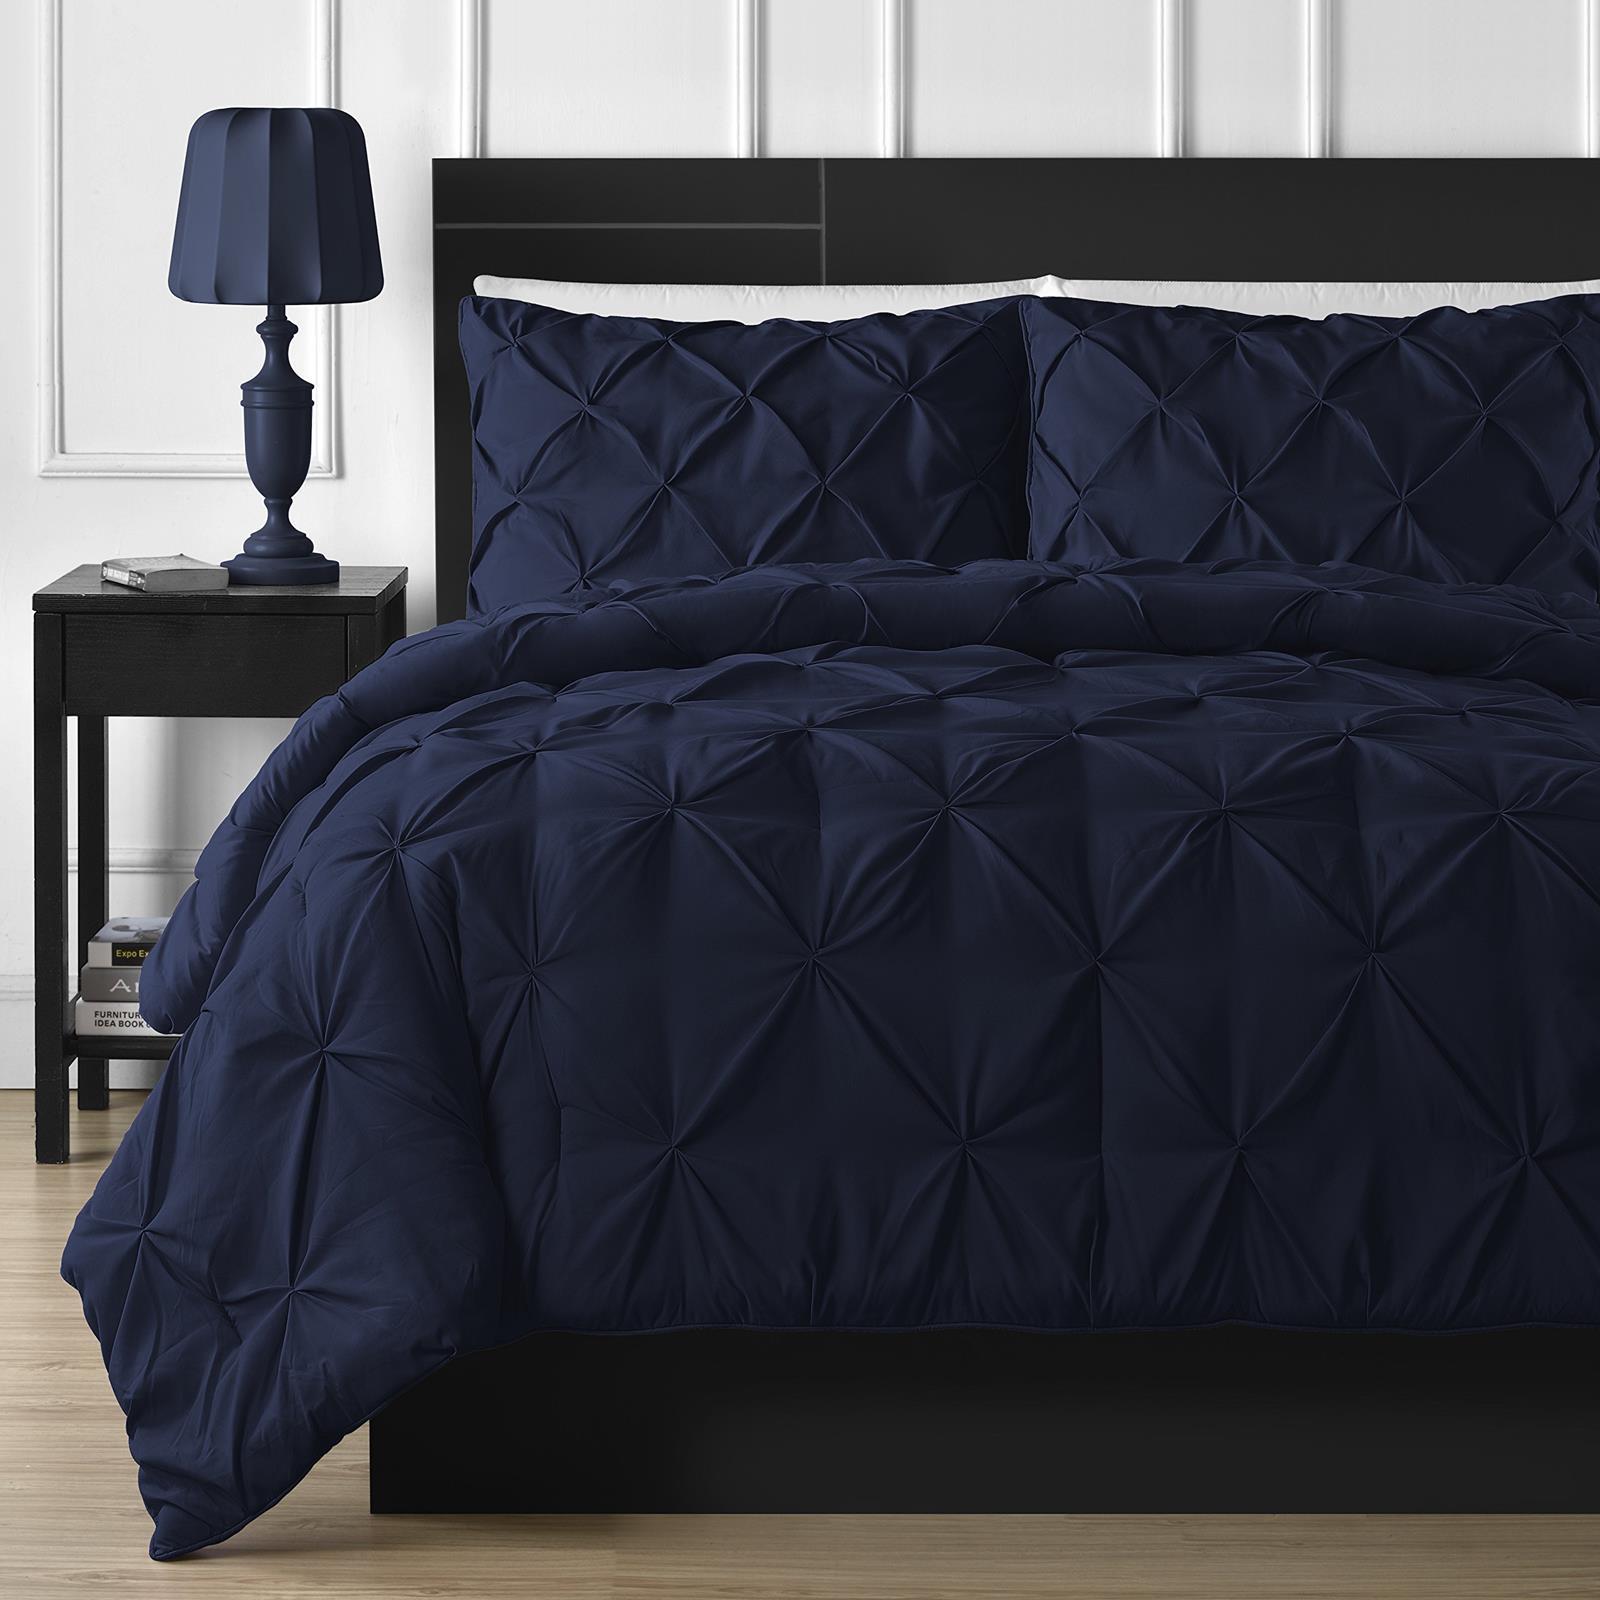 8 Pcs Diamond Navy Blue Bed Sheet Set, Navy Blue And Grey Bed Sheets